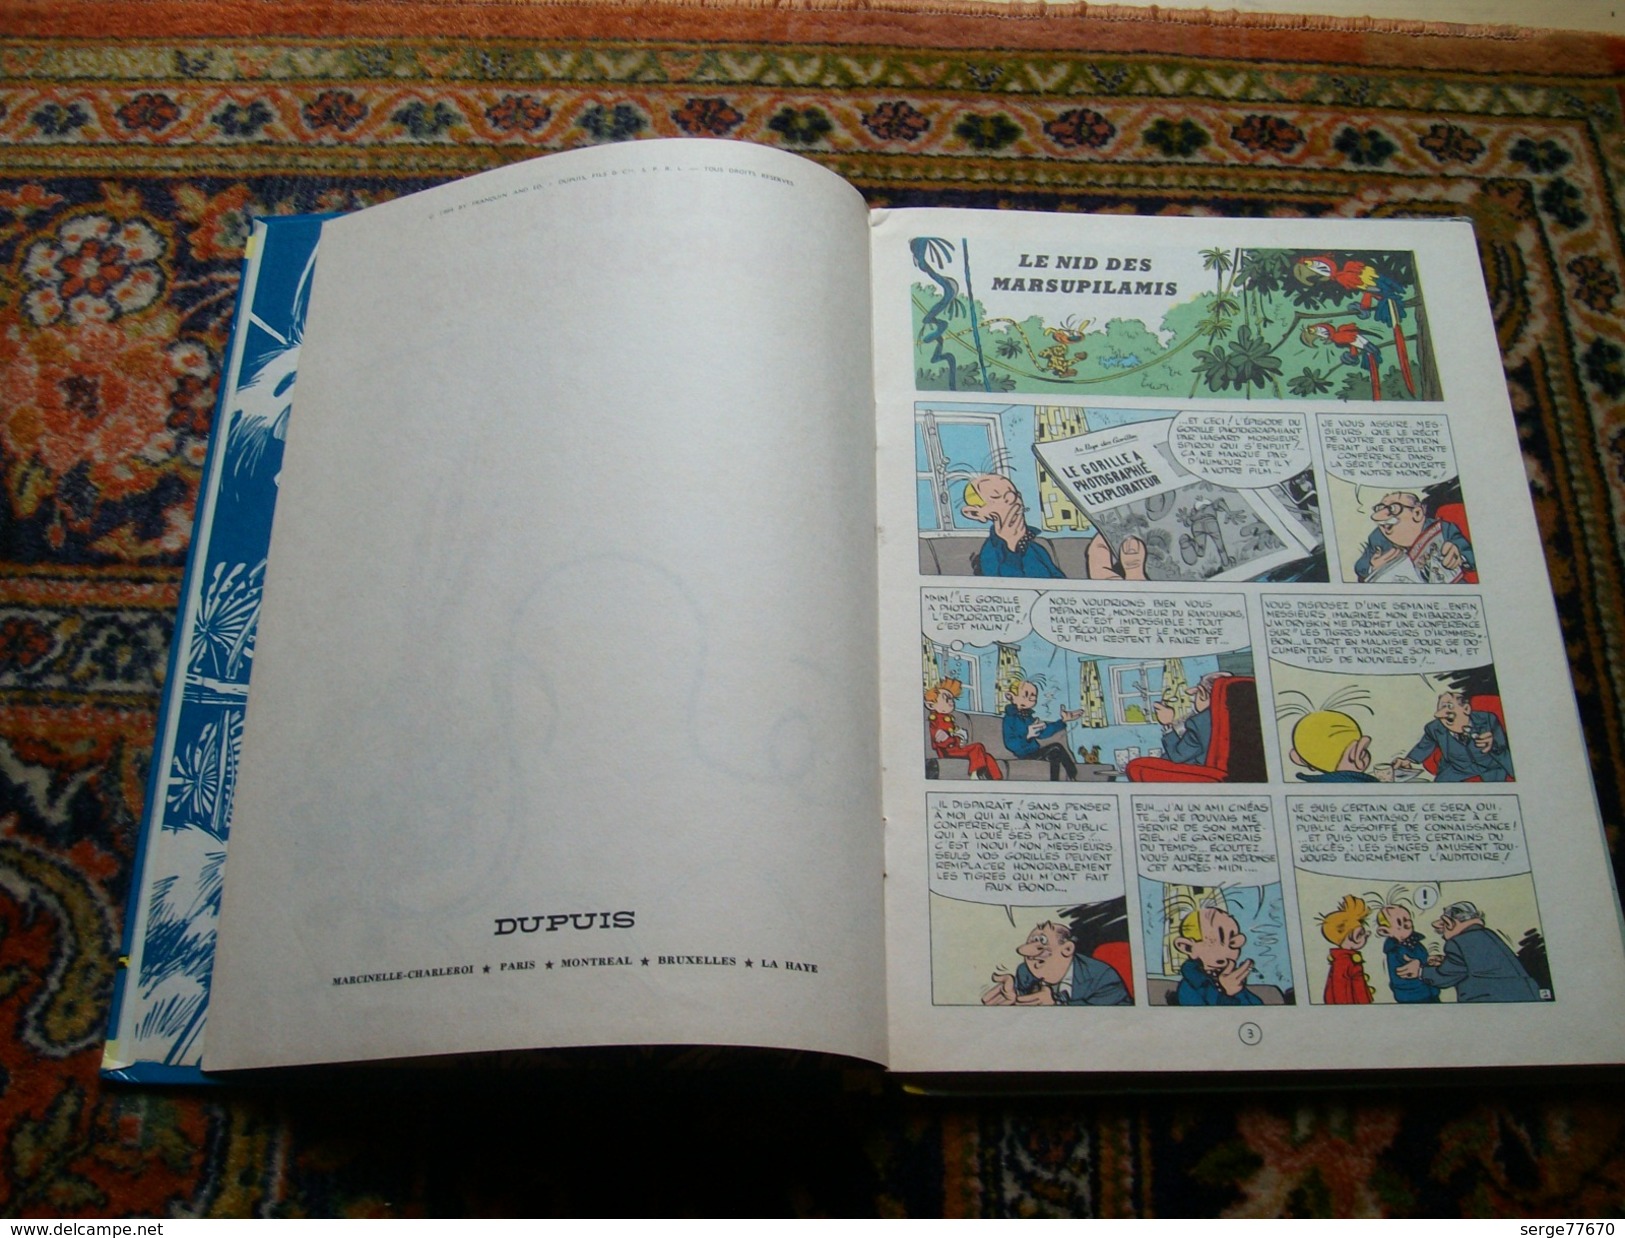 Spirou et Fantasio Franquin Le nid des Marsupilamis Marsupilami édition 1964 Dupuis